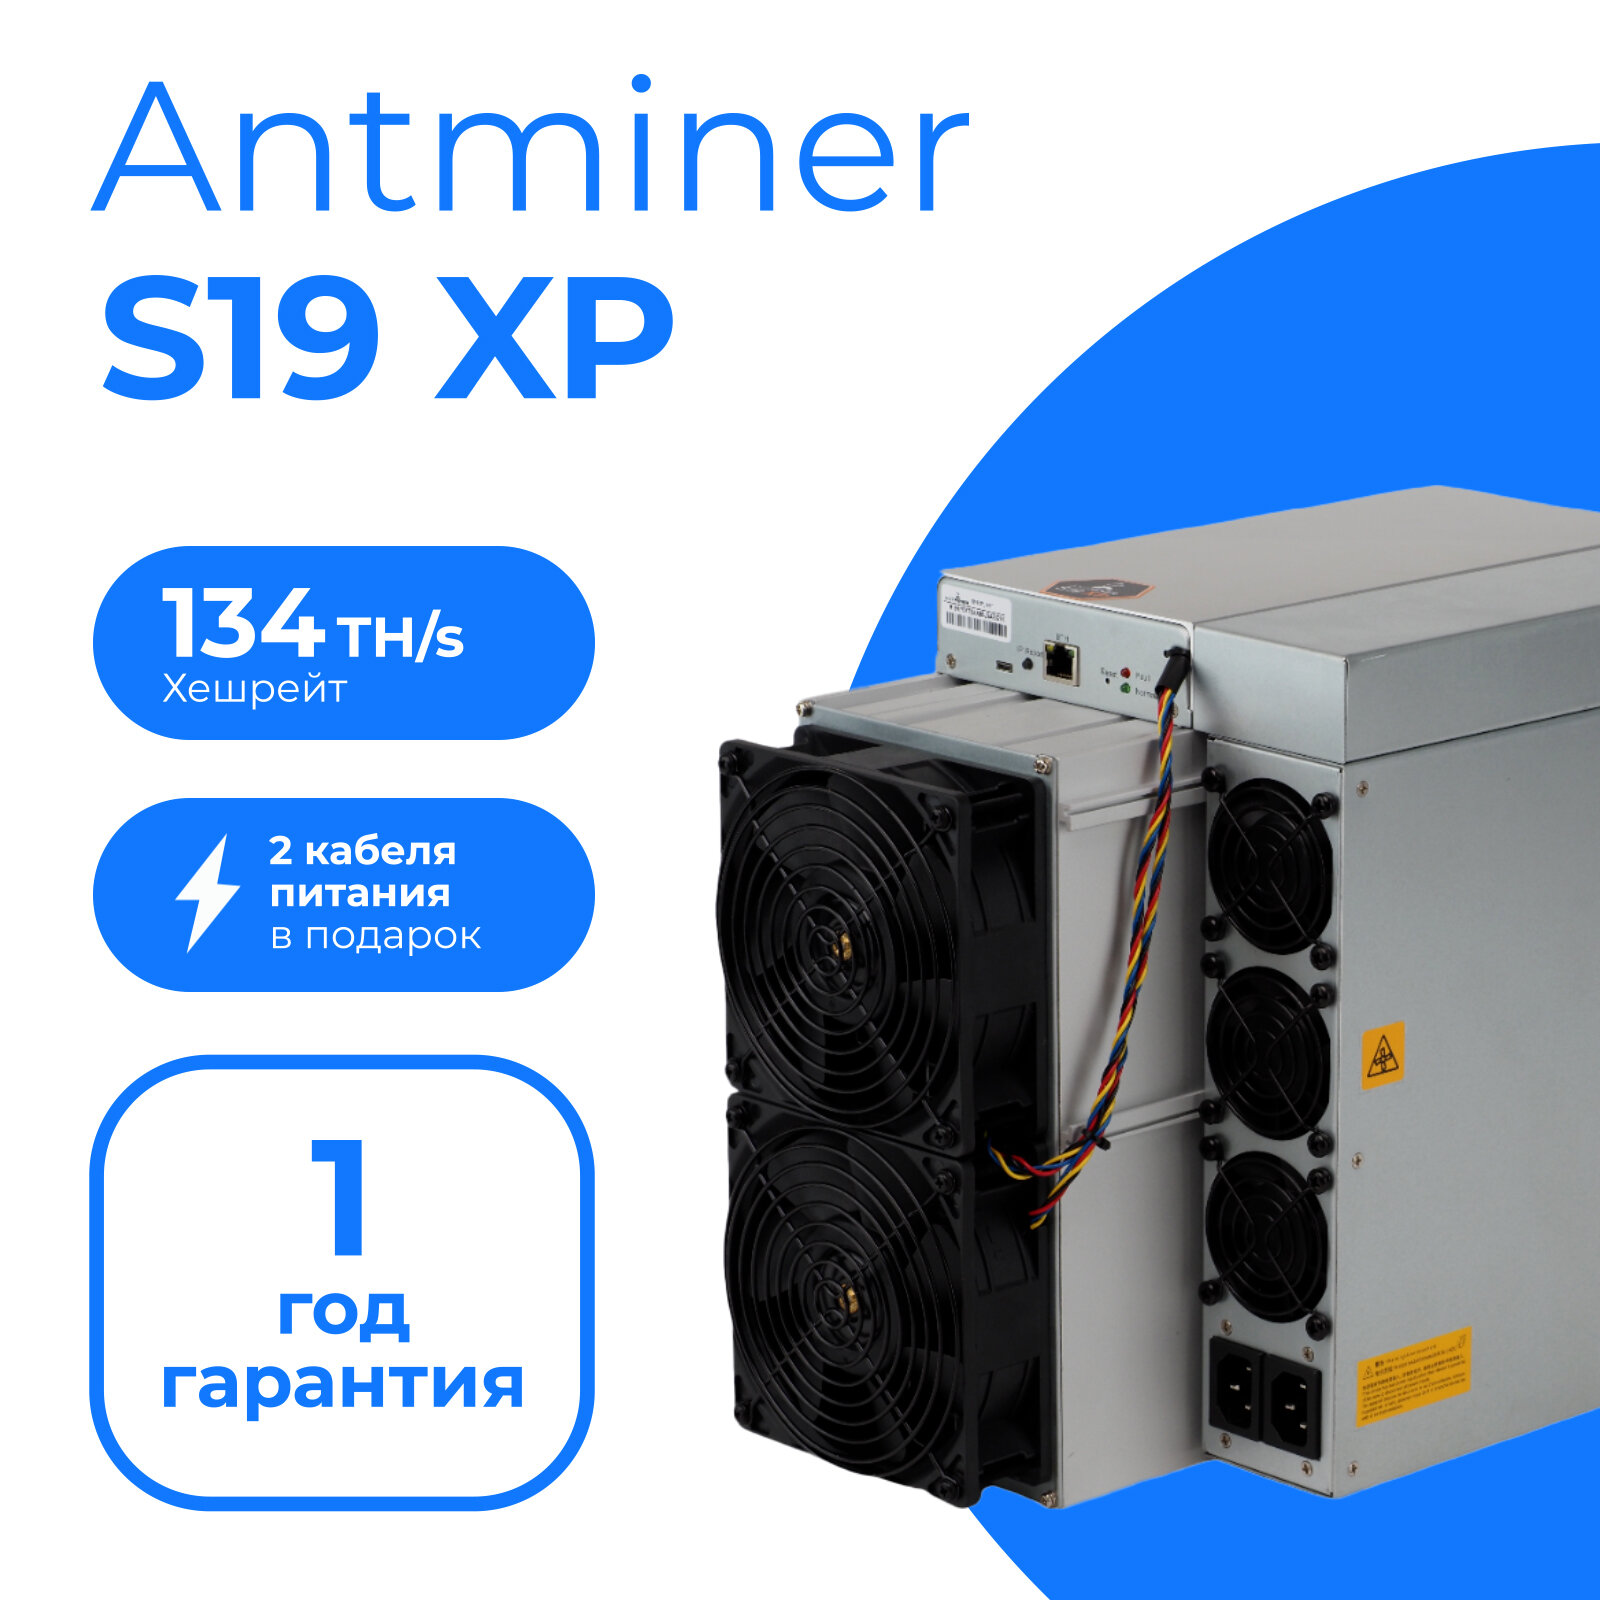 Набор Асик майнер Bitmain Antminer S19 XP 134 TH/s + 2 кабеля С13 3х1,5